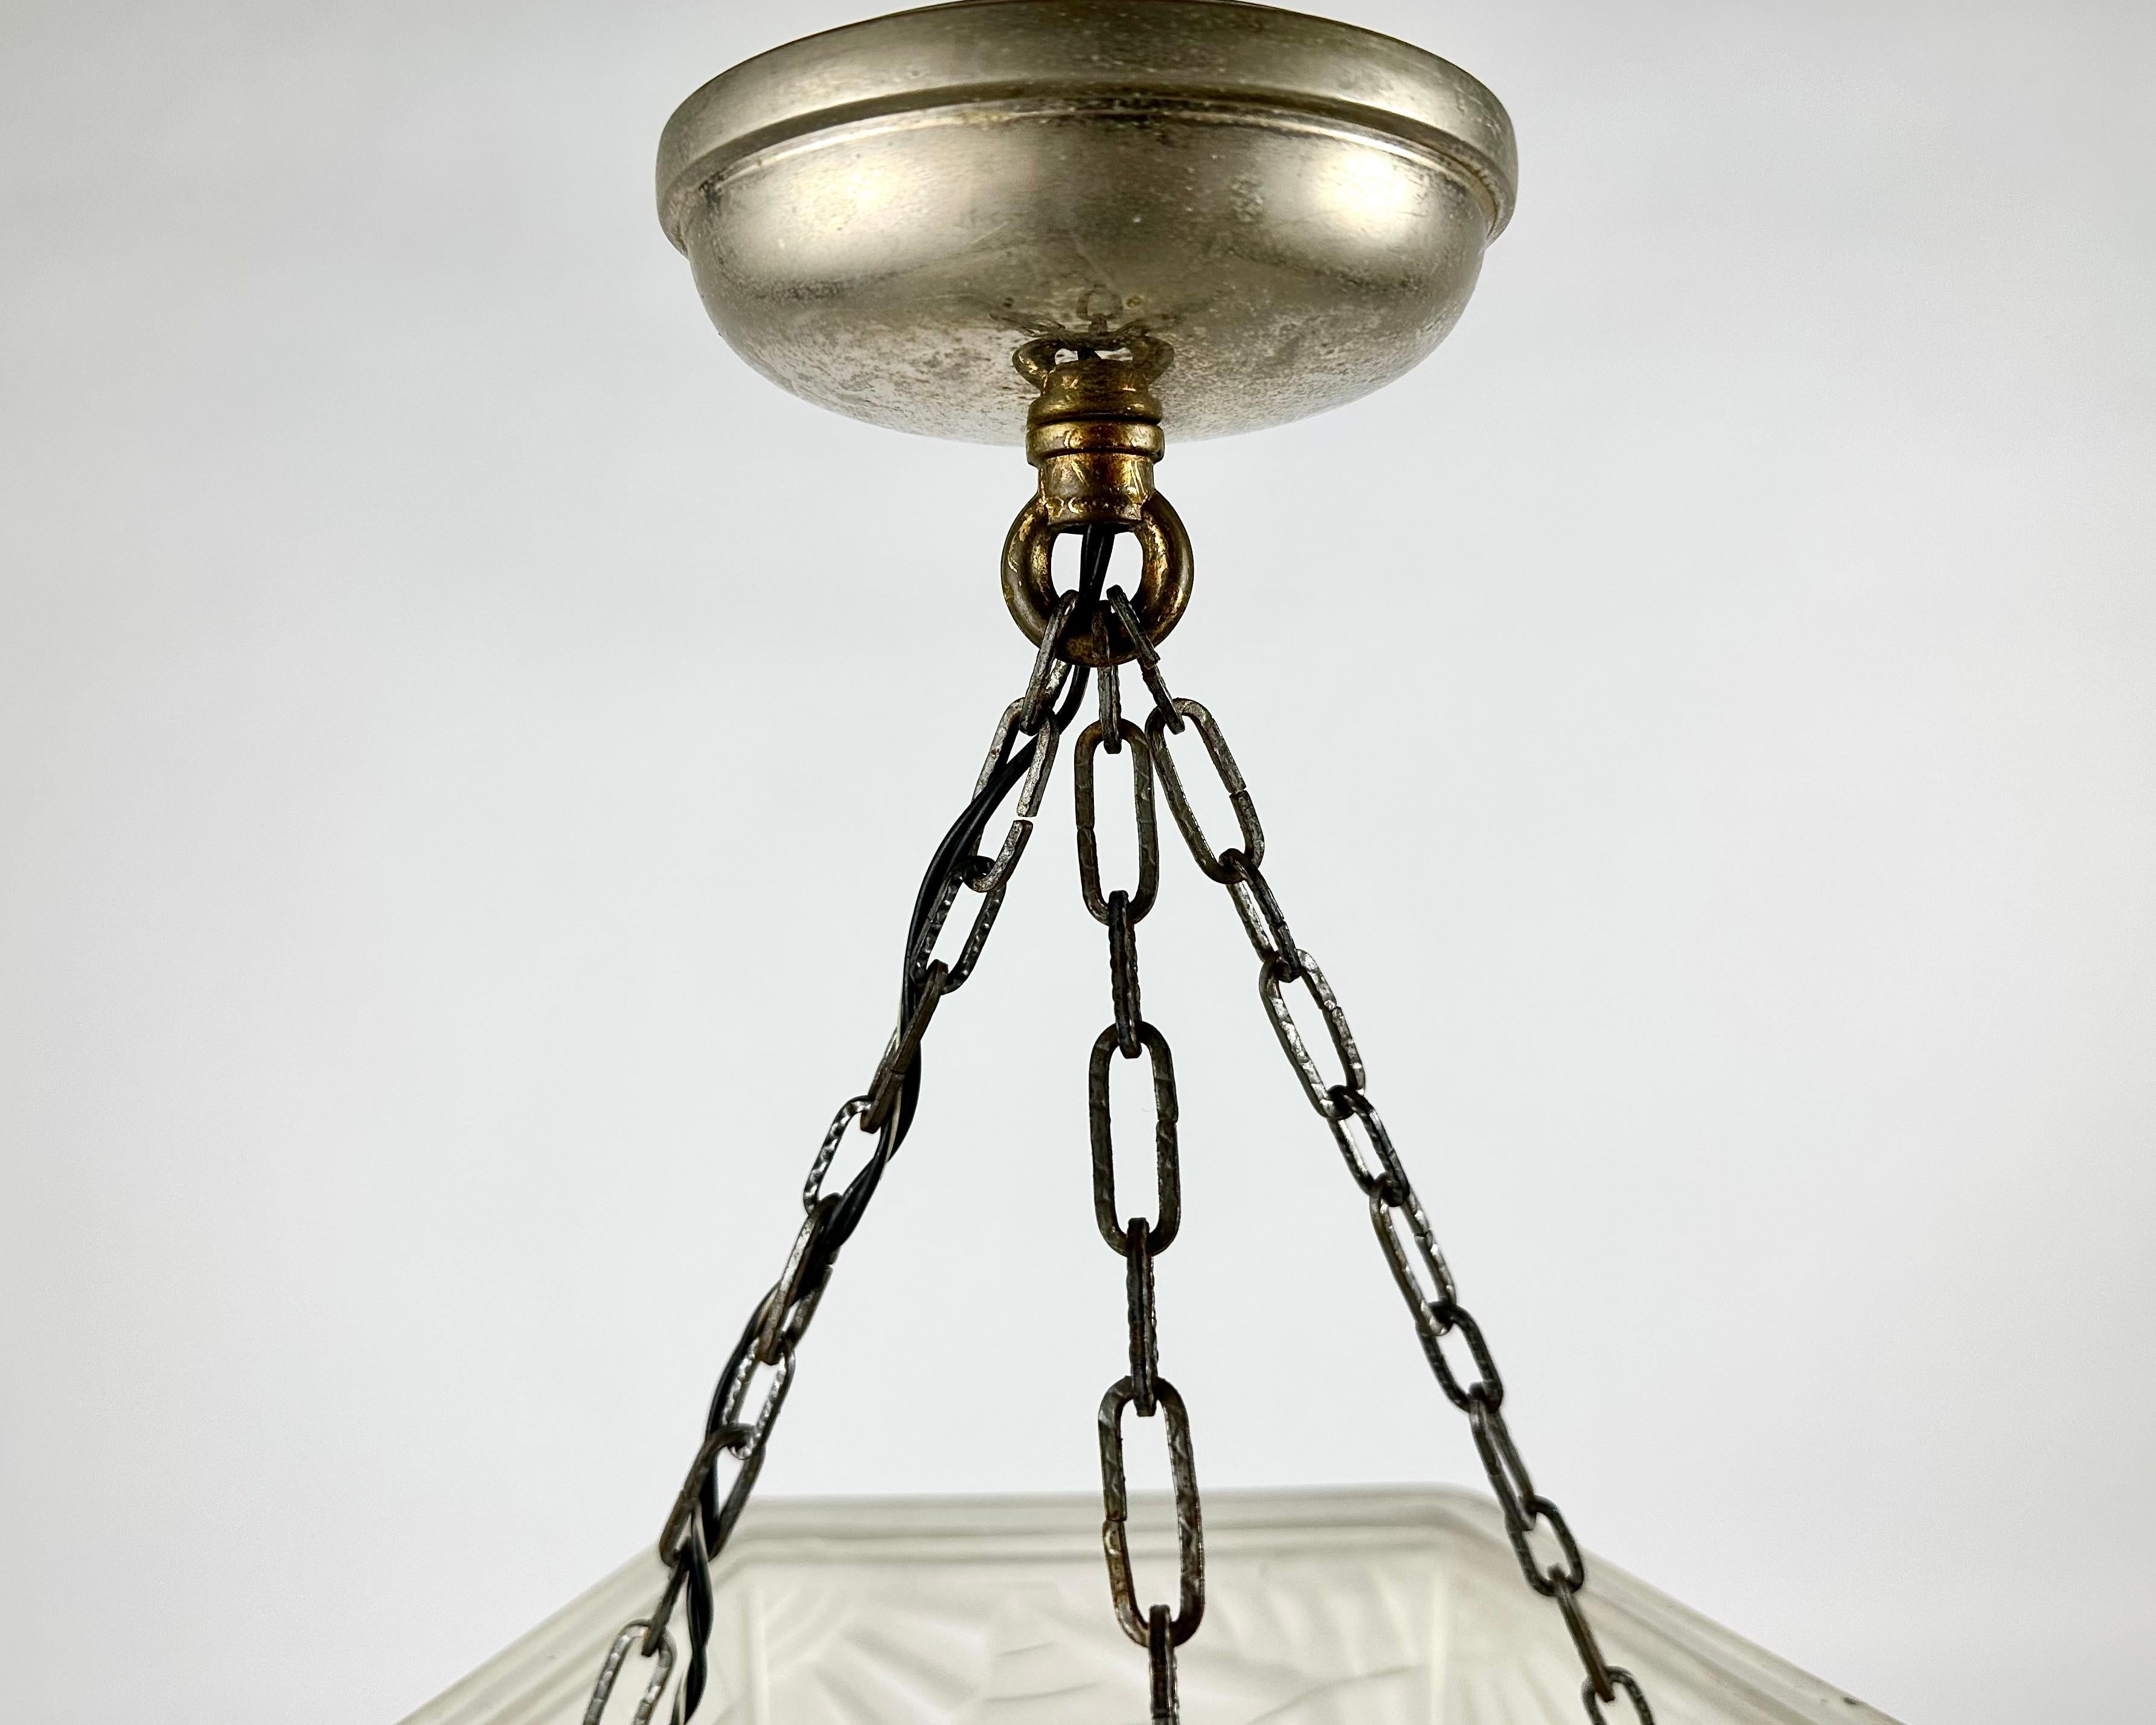 Chandelier Art Deco Brass Glass Suspension Ceiling Lamp Art Deco France 1930 For Sale 2